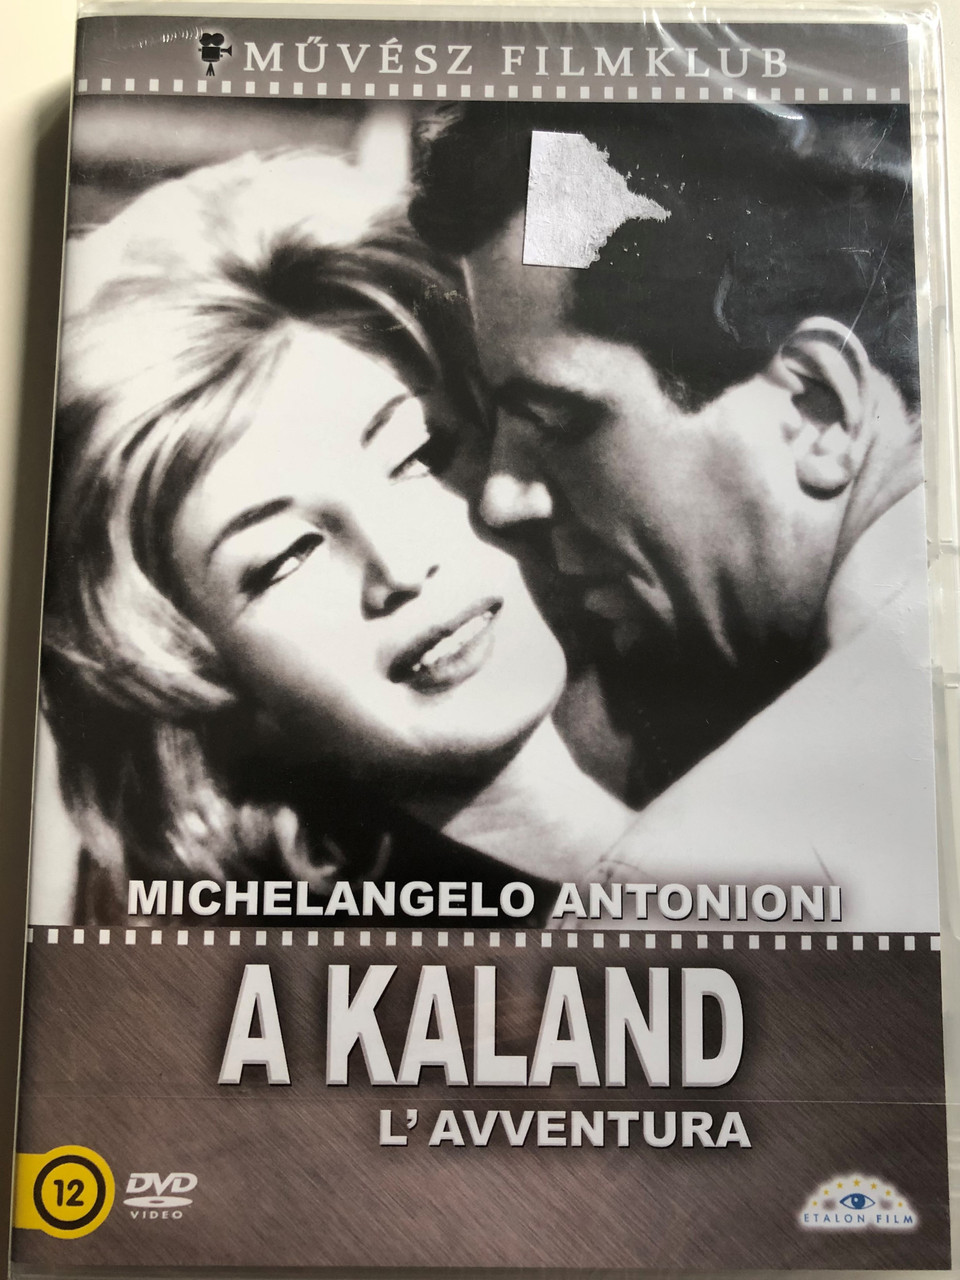 L' Avventura DVD 1960 A Kaland / Directed by Michelangelo Antonioni /  Starring: Monica Vitti, Gabriele Ferzetti, Lea Massari, Dominique Blanchar  / Black & White - bibleinmylanguage